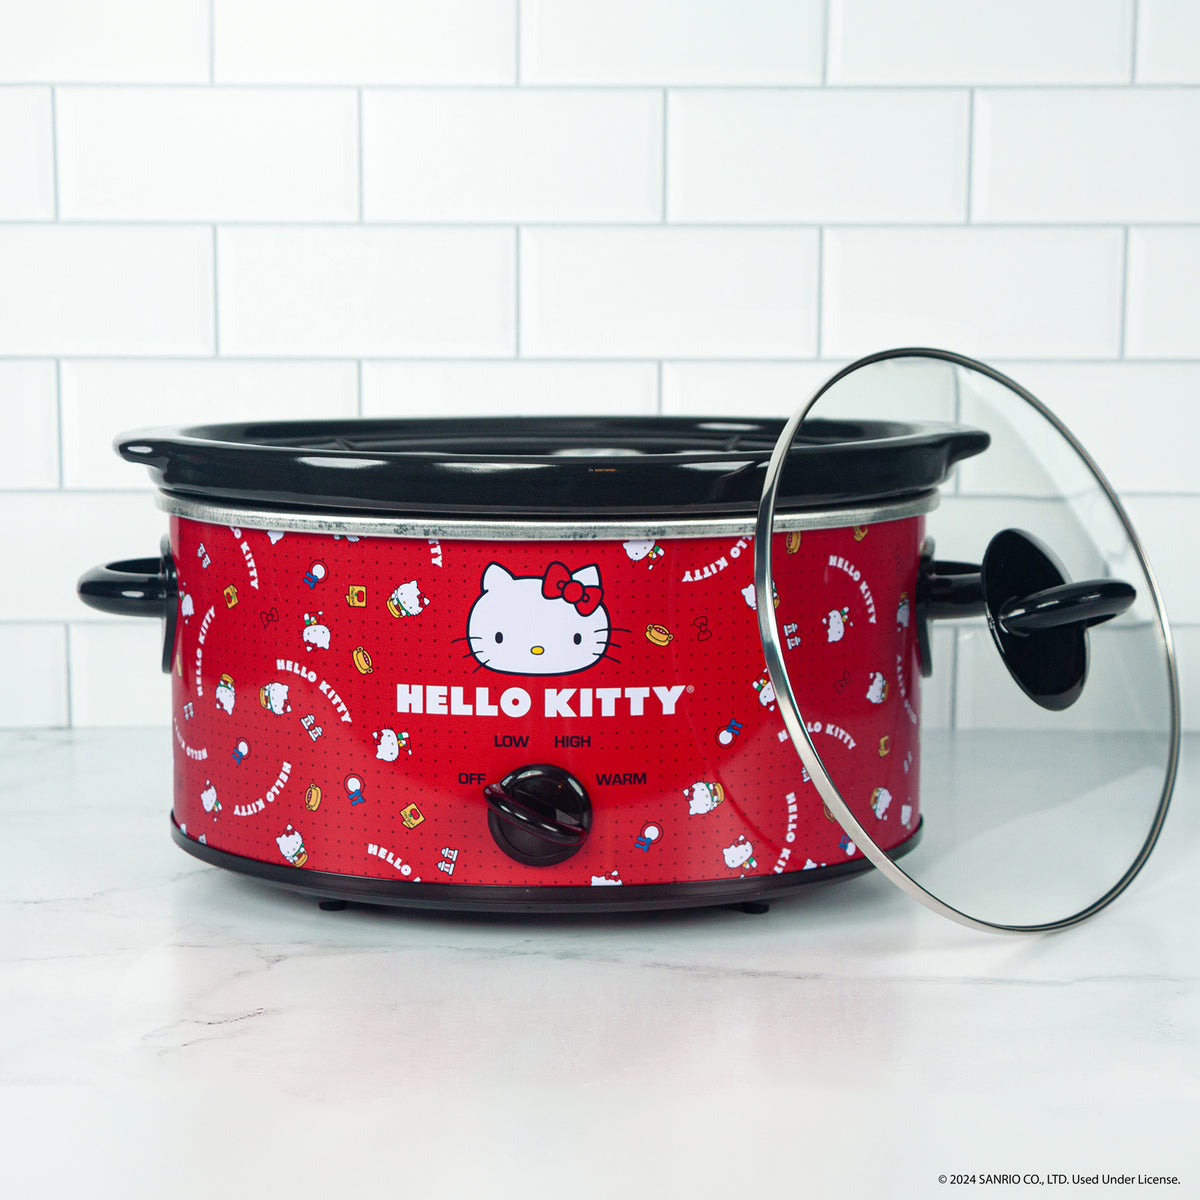 Hello Kitty 5-Quart Slow Cooker